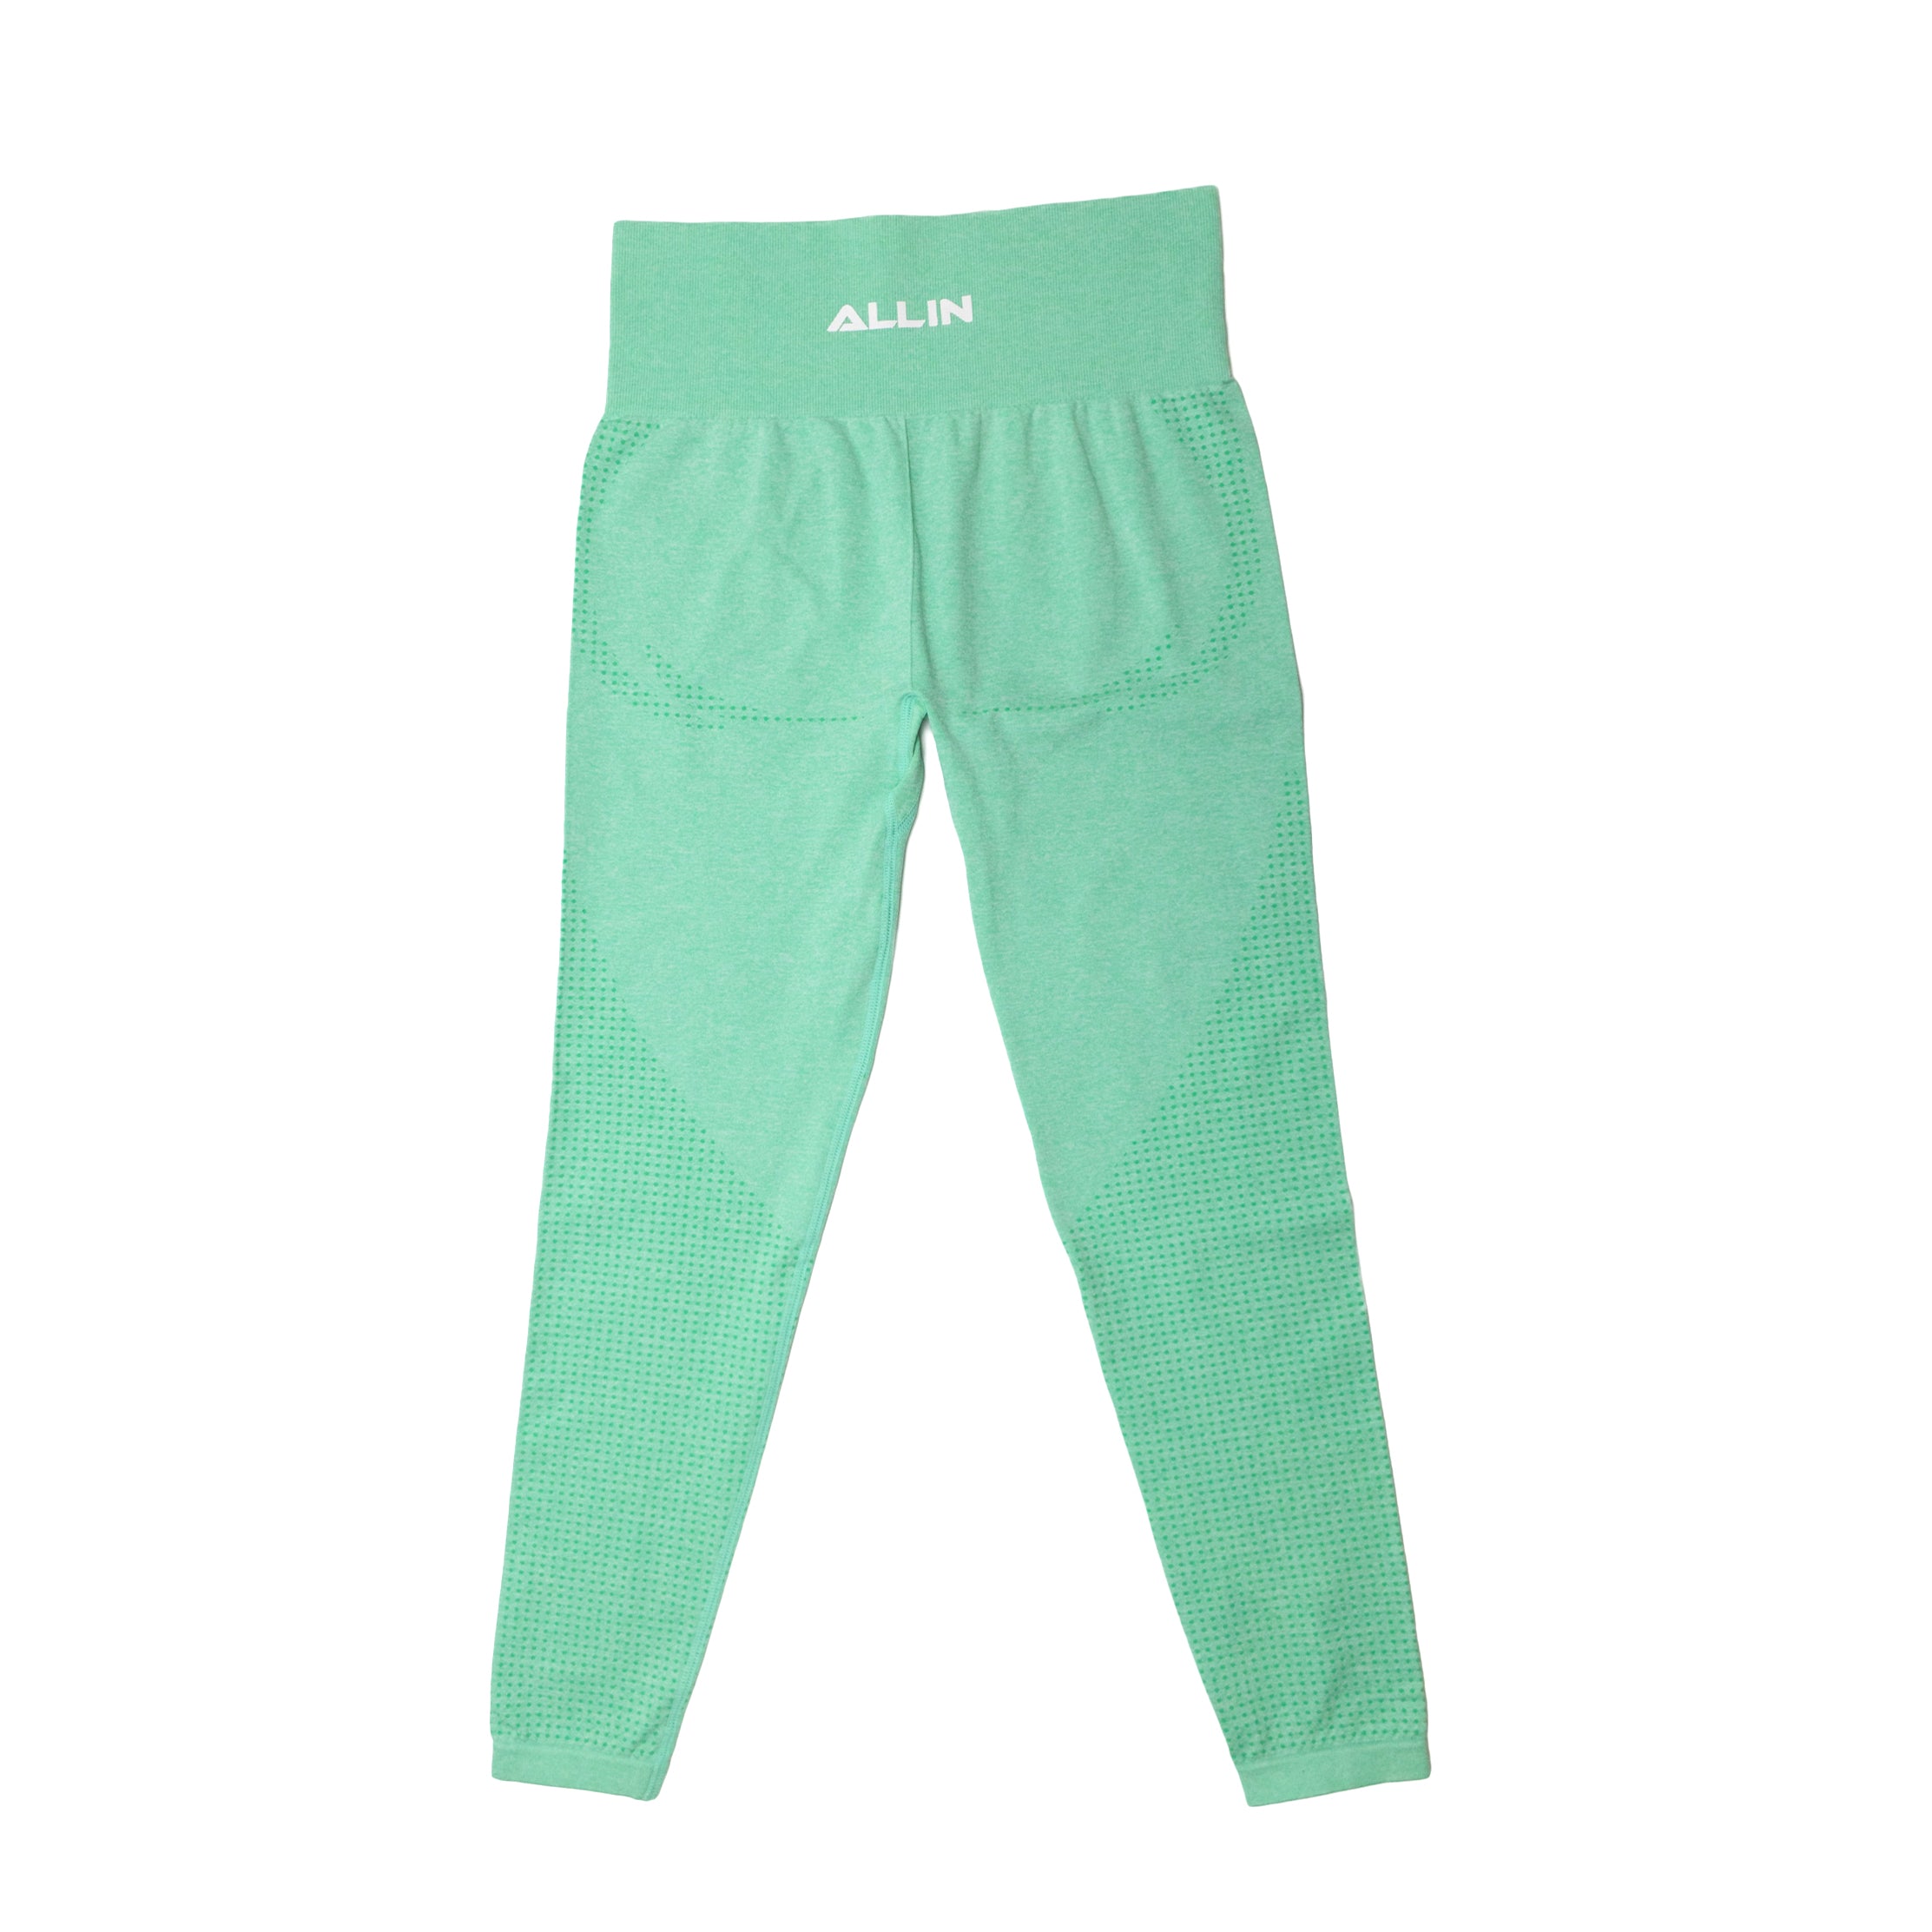 Stash Me In Back Zipper leggings for Women – Mint Green – MICHELLE SALINS